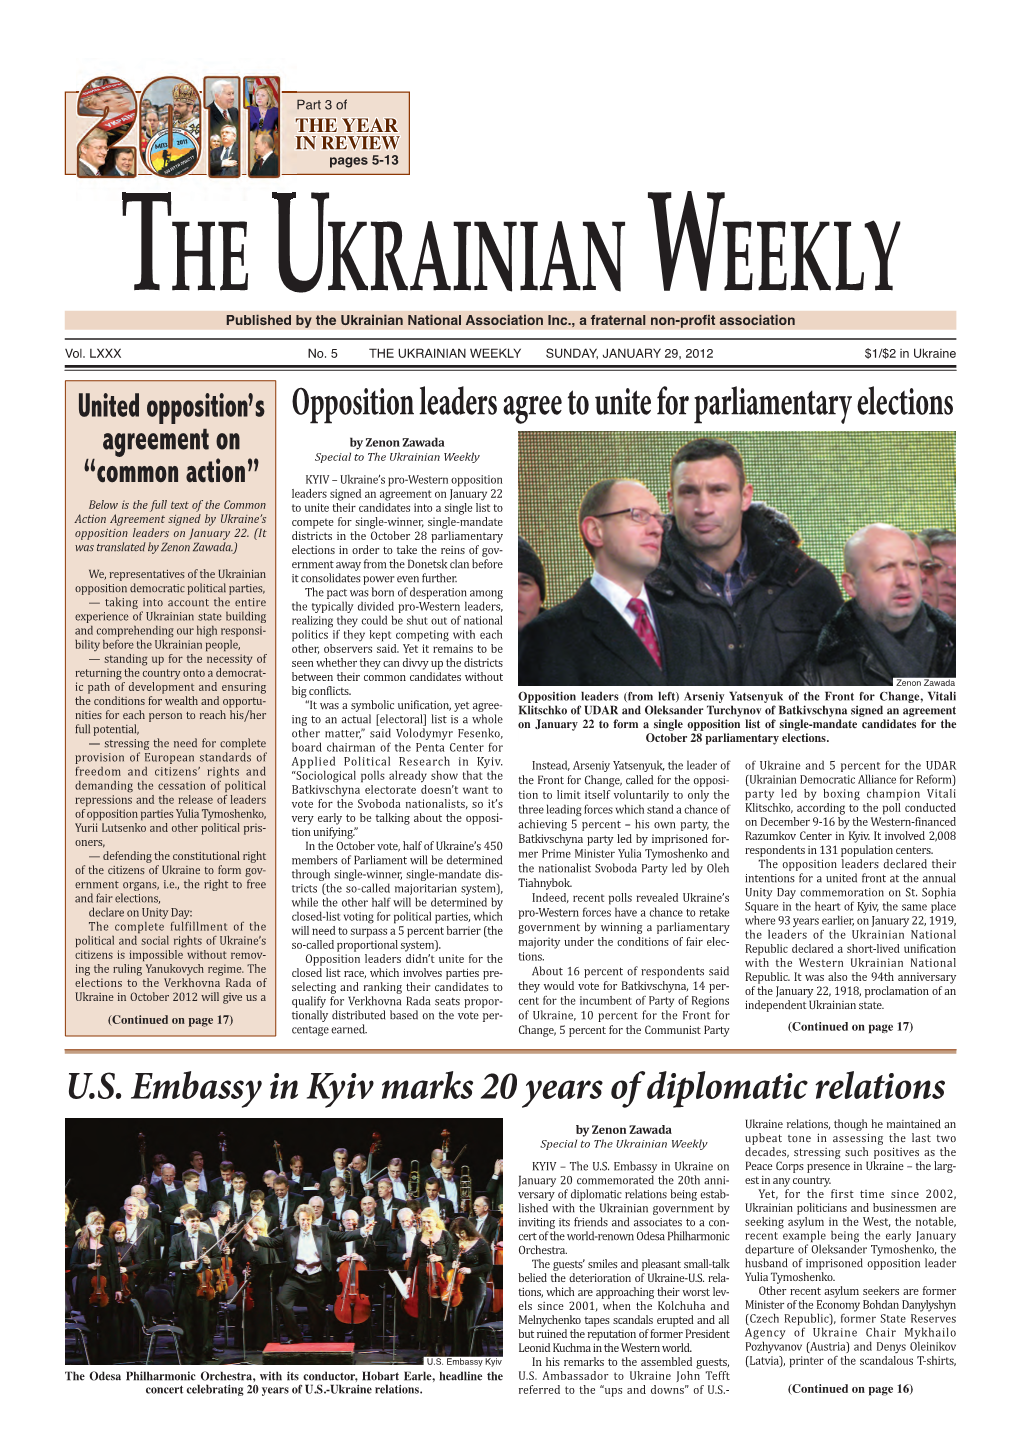 The Ukrainian Weekly 2012, No.5